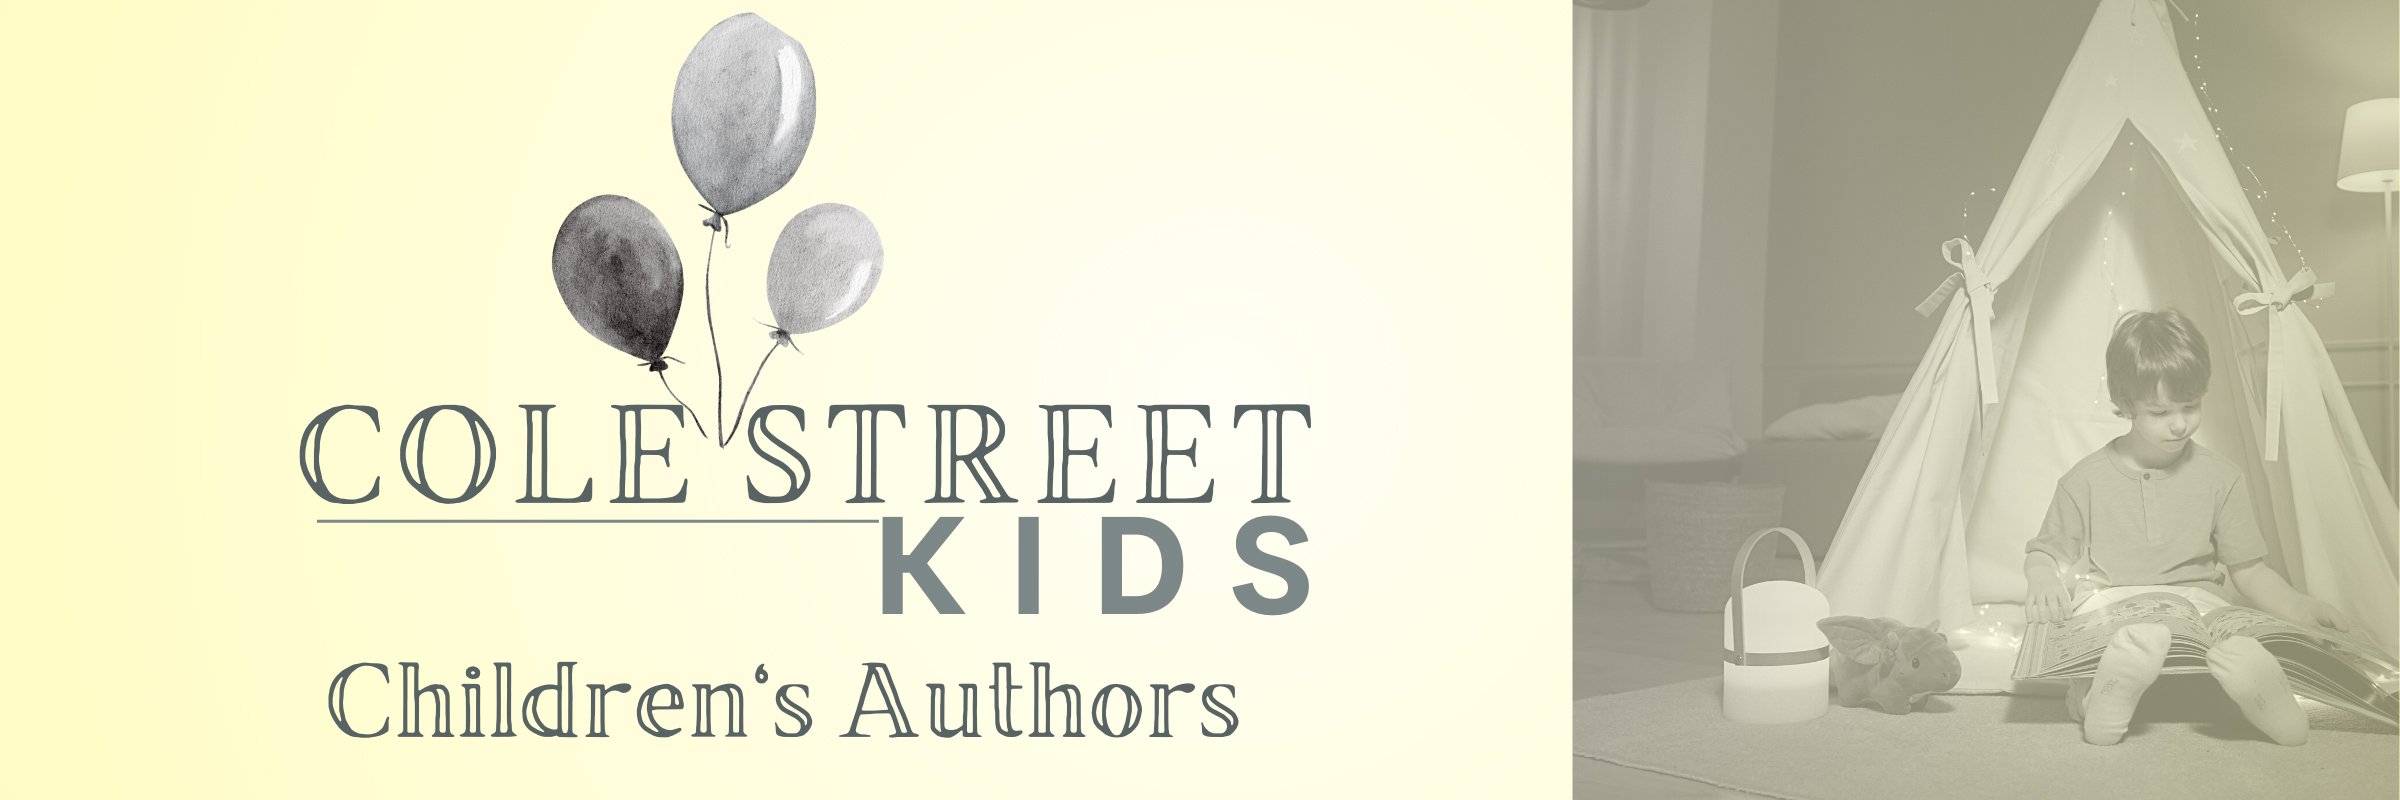 Cole Street Kids - Children0s Authors